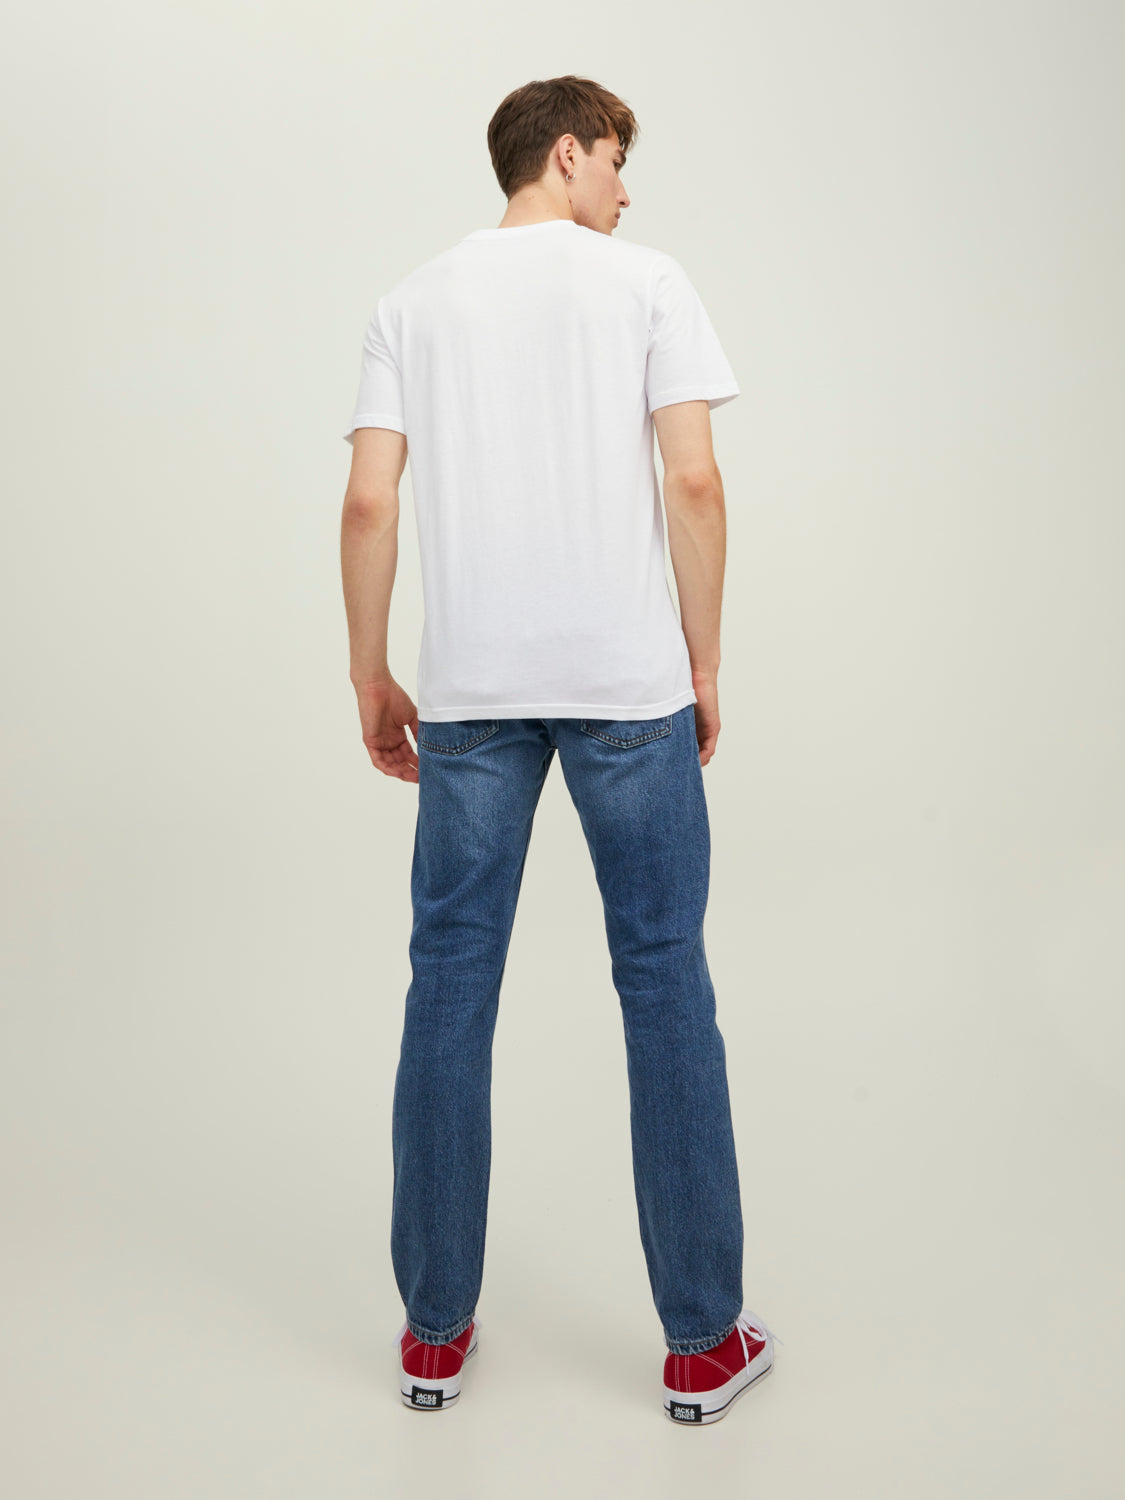 JJEVAN T-Shirt - White